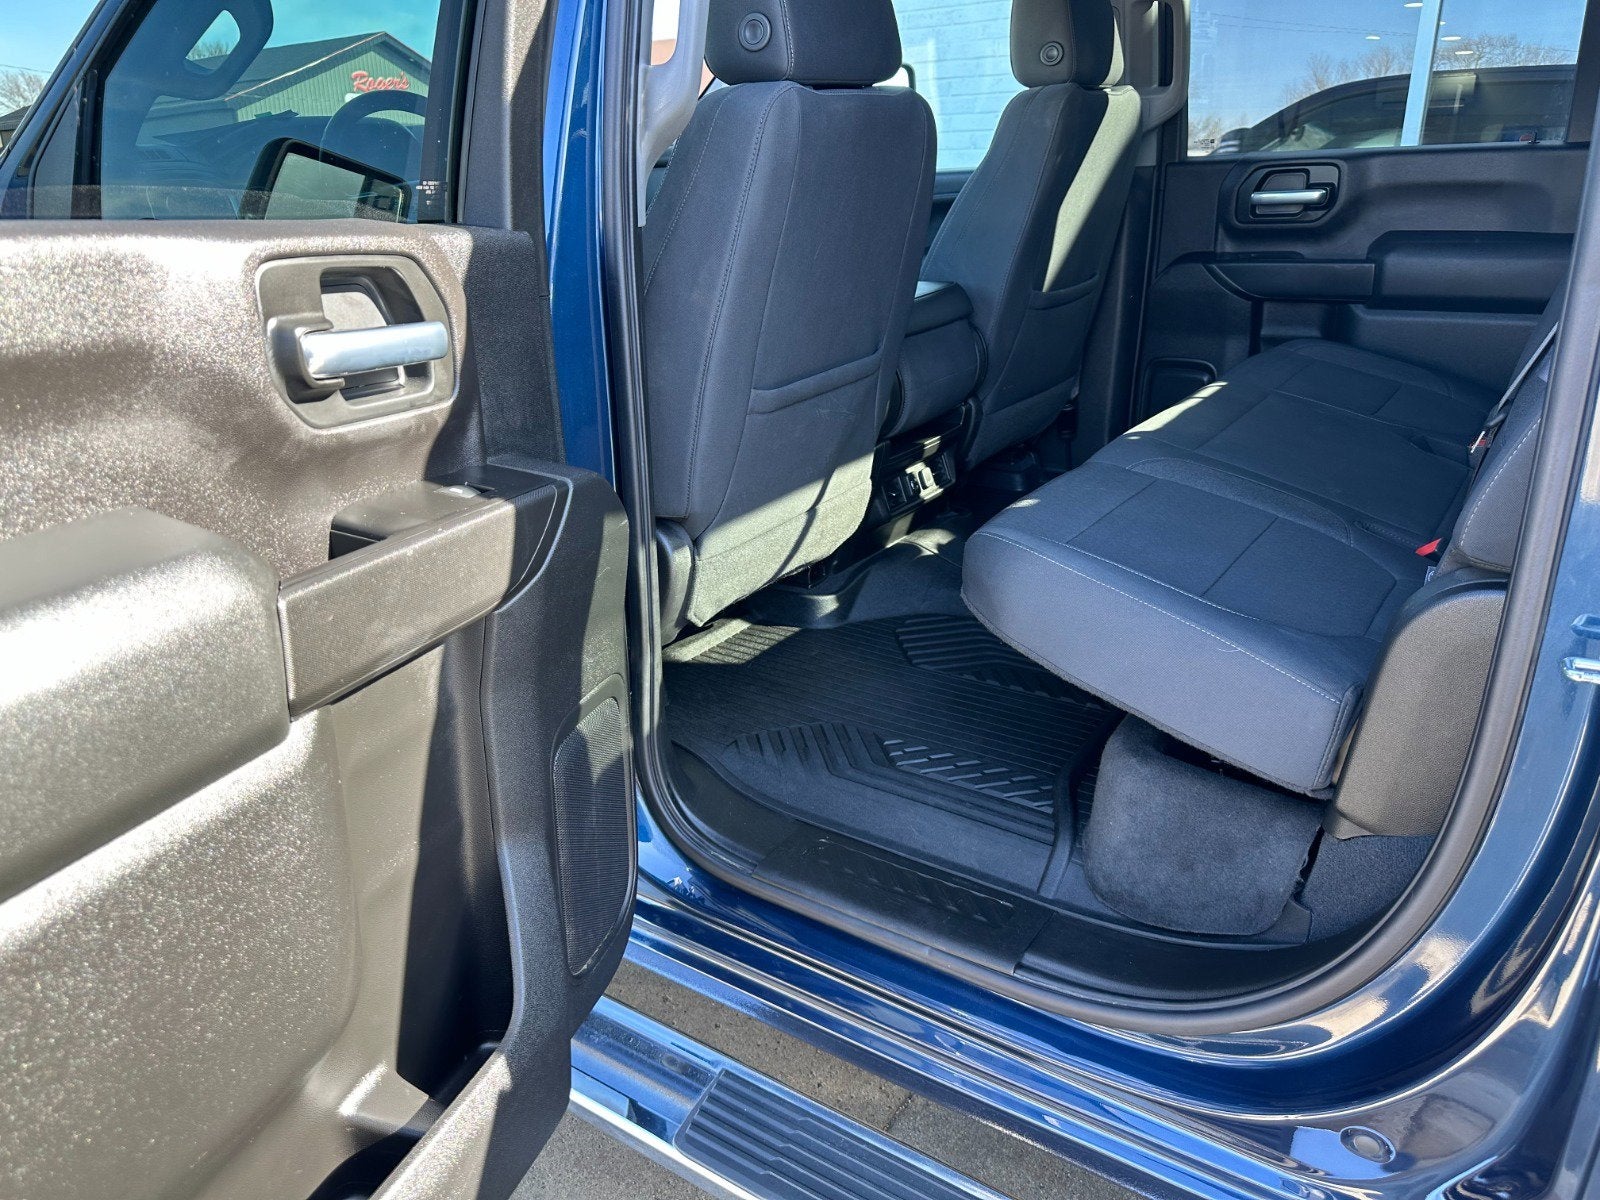 2020 Chevrolet Silverado 3500 HD LT, Convenience Pkg, Heated Seats/Steering Wheel